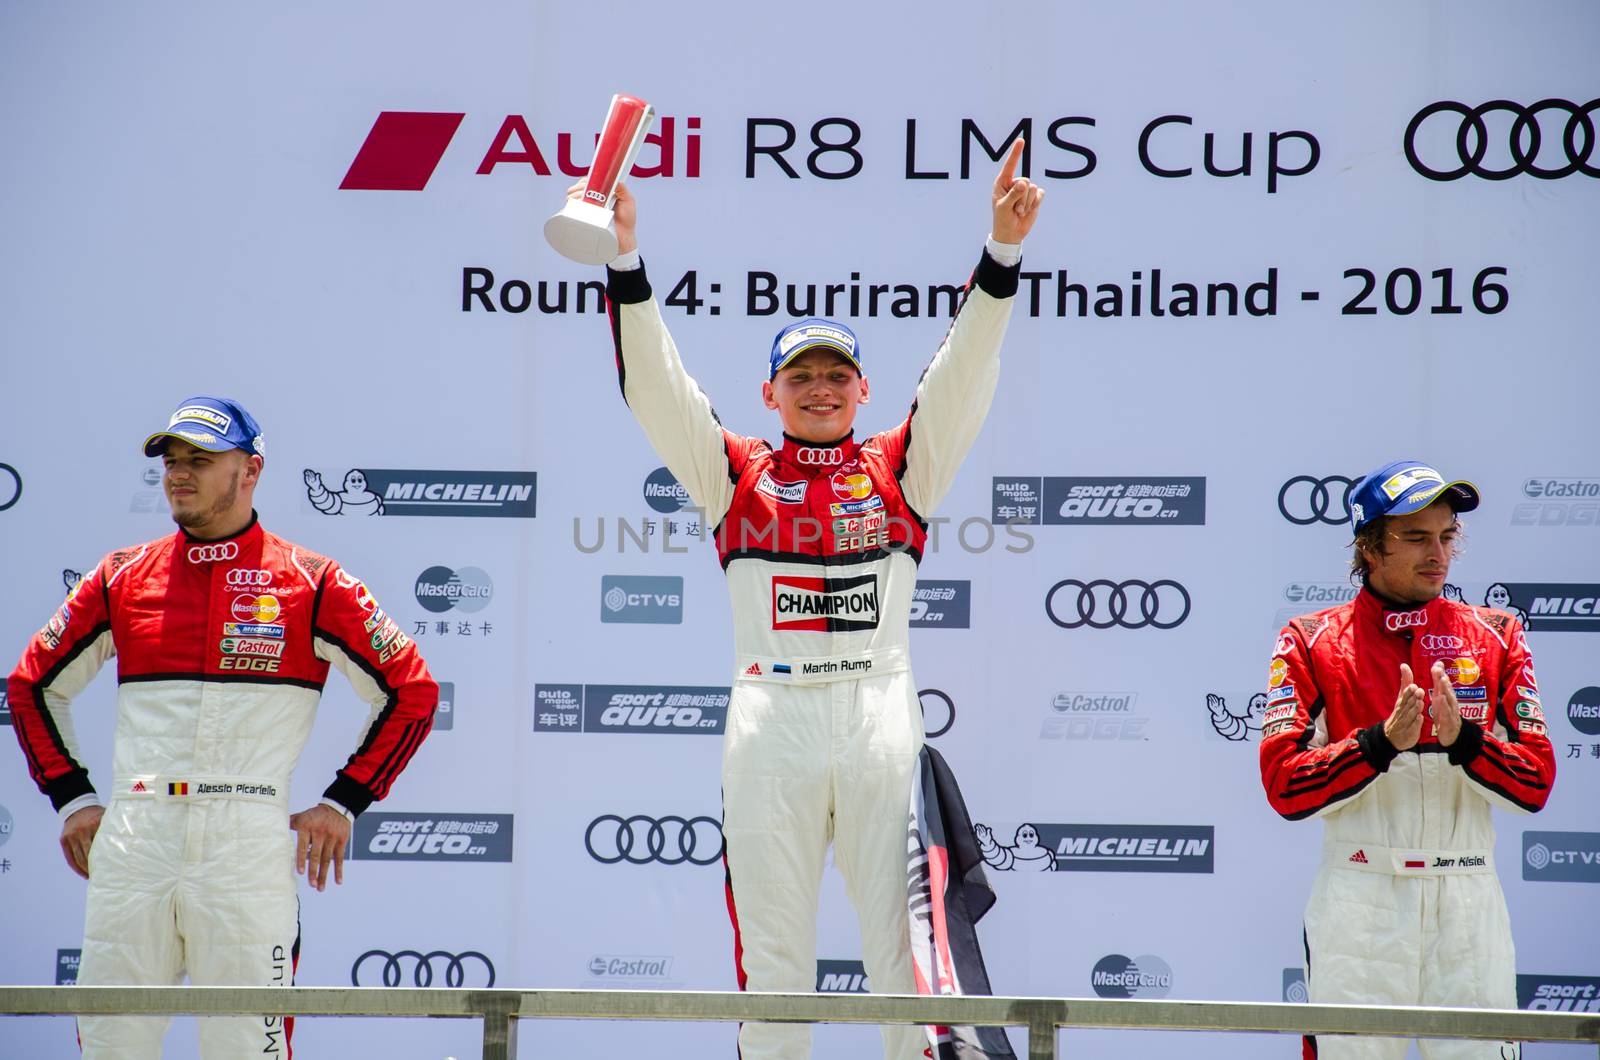 BURIRAM - THAILAND 24 : Audi R8 LMS Cup on display Buriram Super Race 2016 at Chang International Racing Circuit on July 24, 2016, Buriram, Thailand.